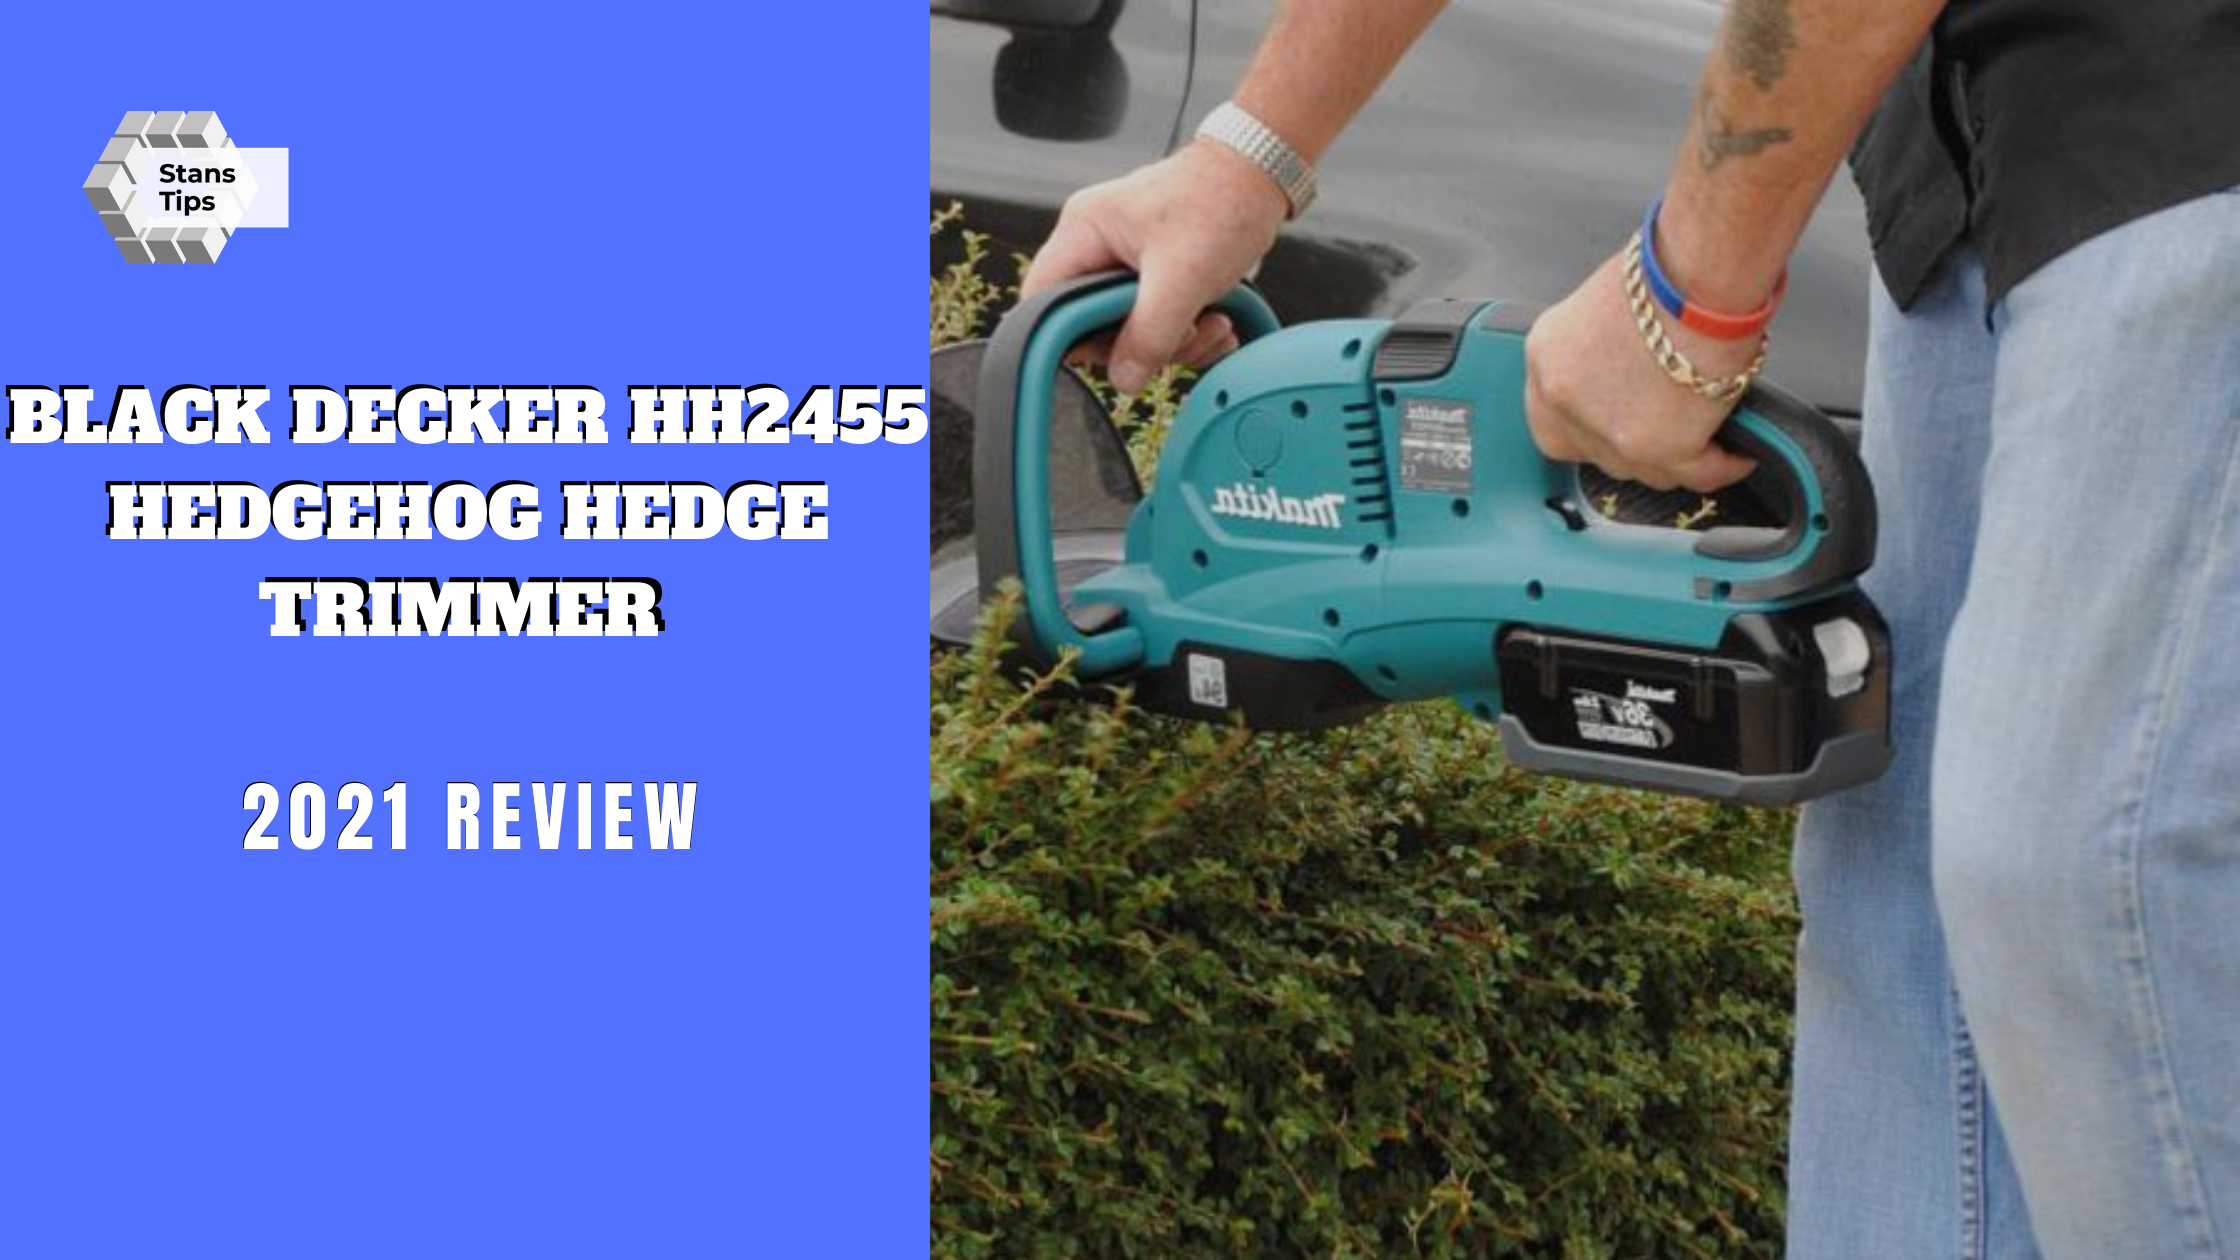 Black decker hh2455 hedgehog hedge trimmer review